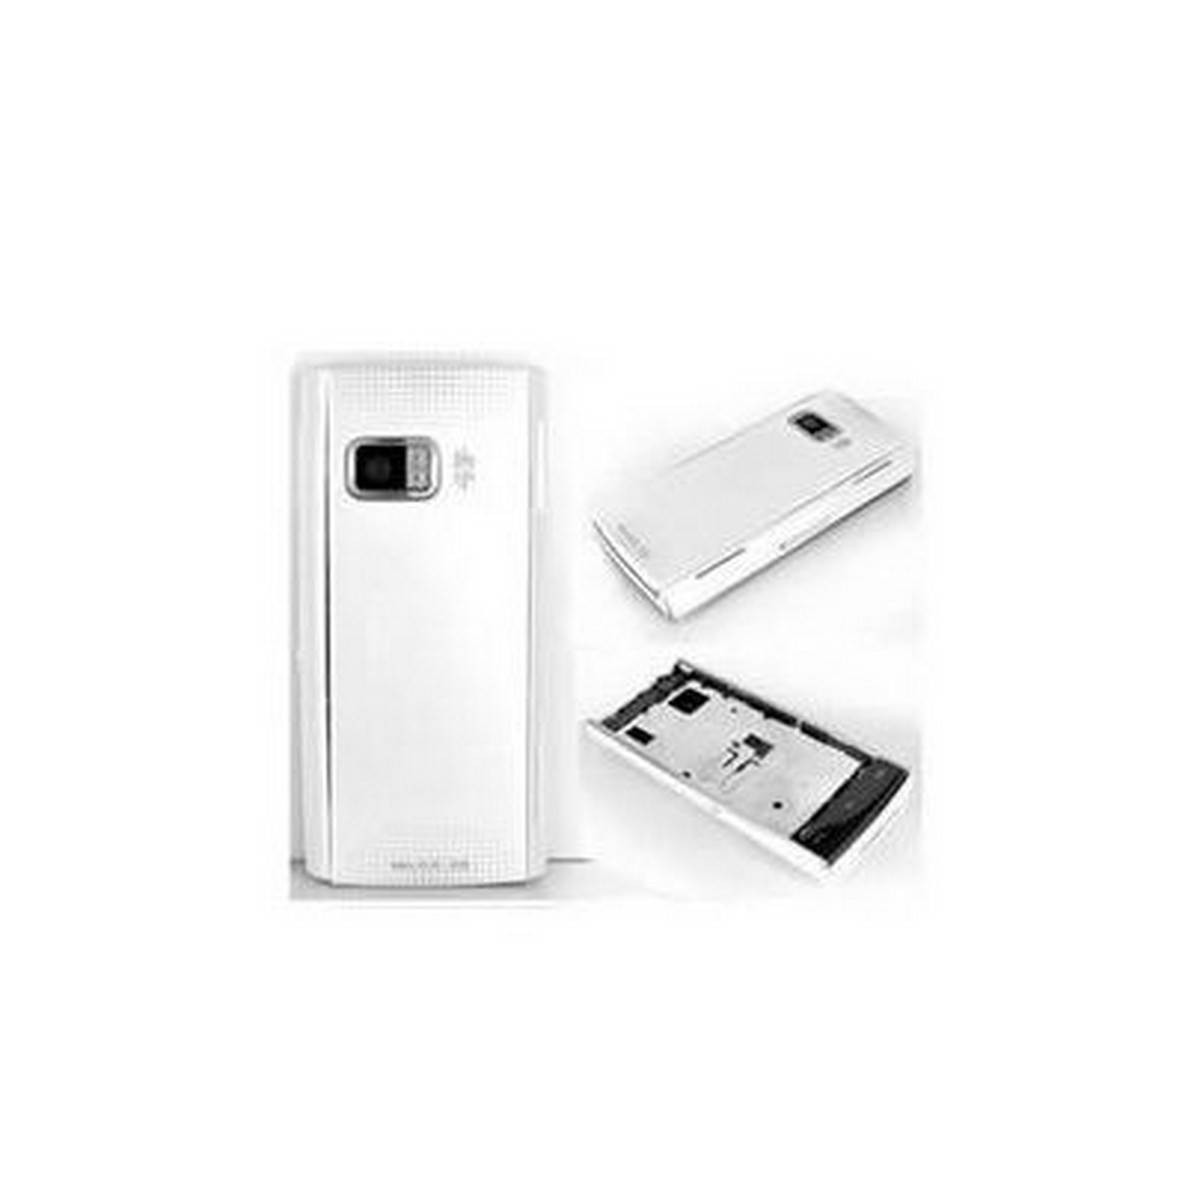 Carcasa Nokia X6 color blanco